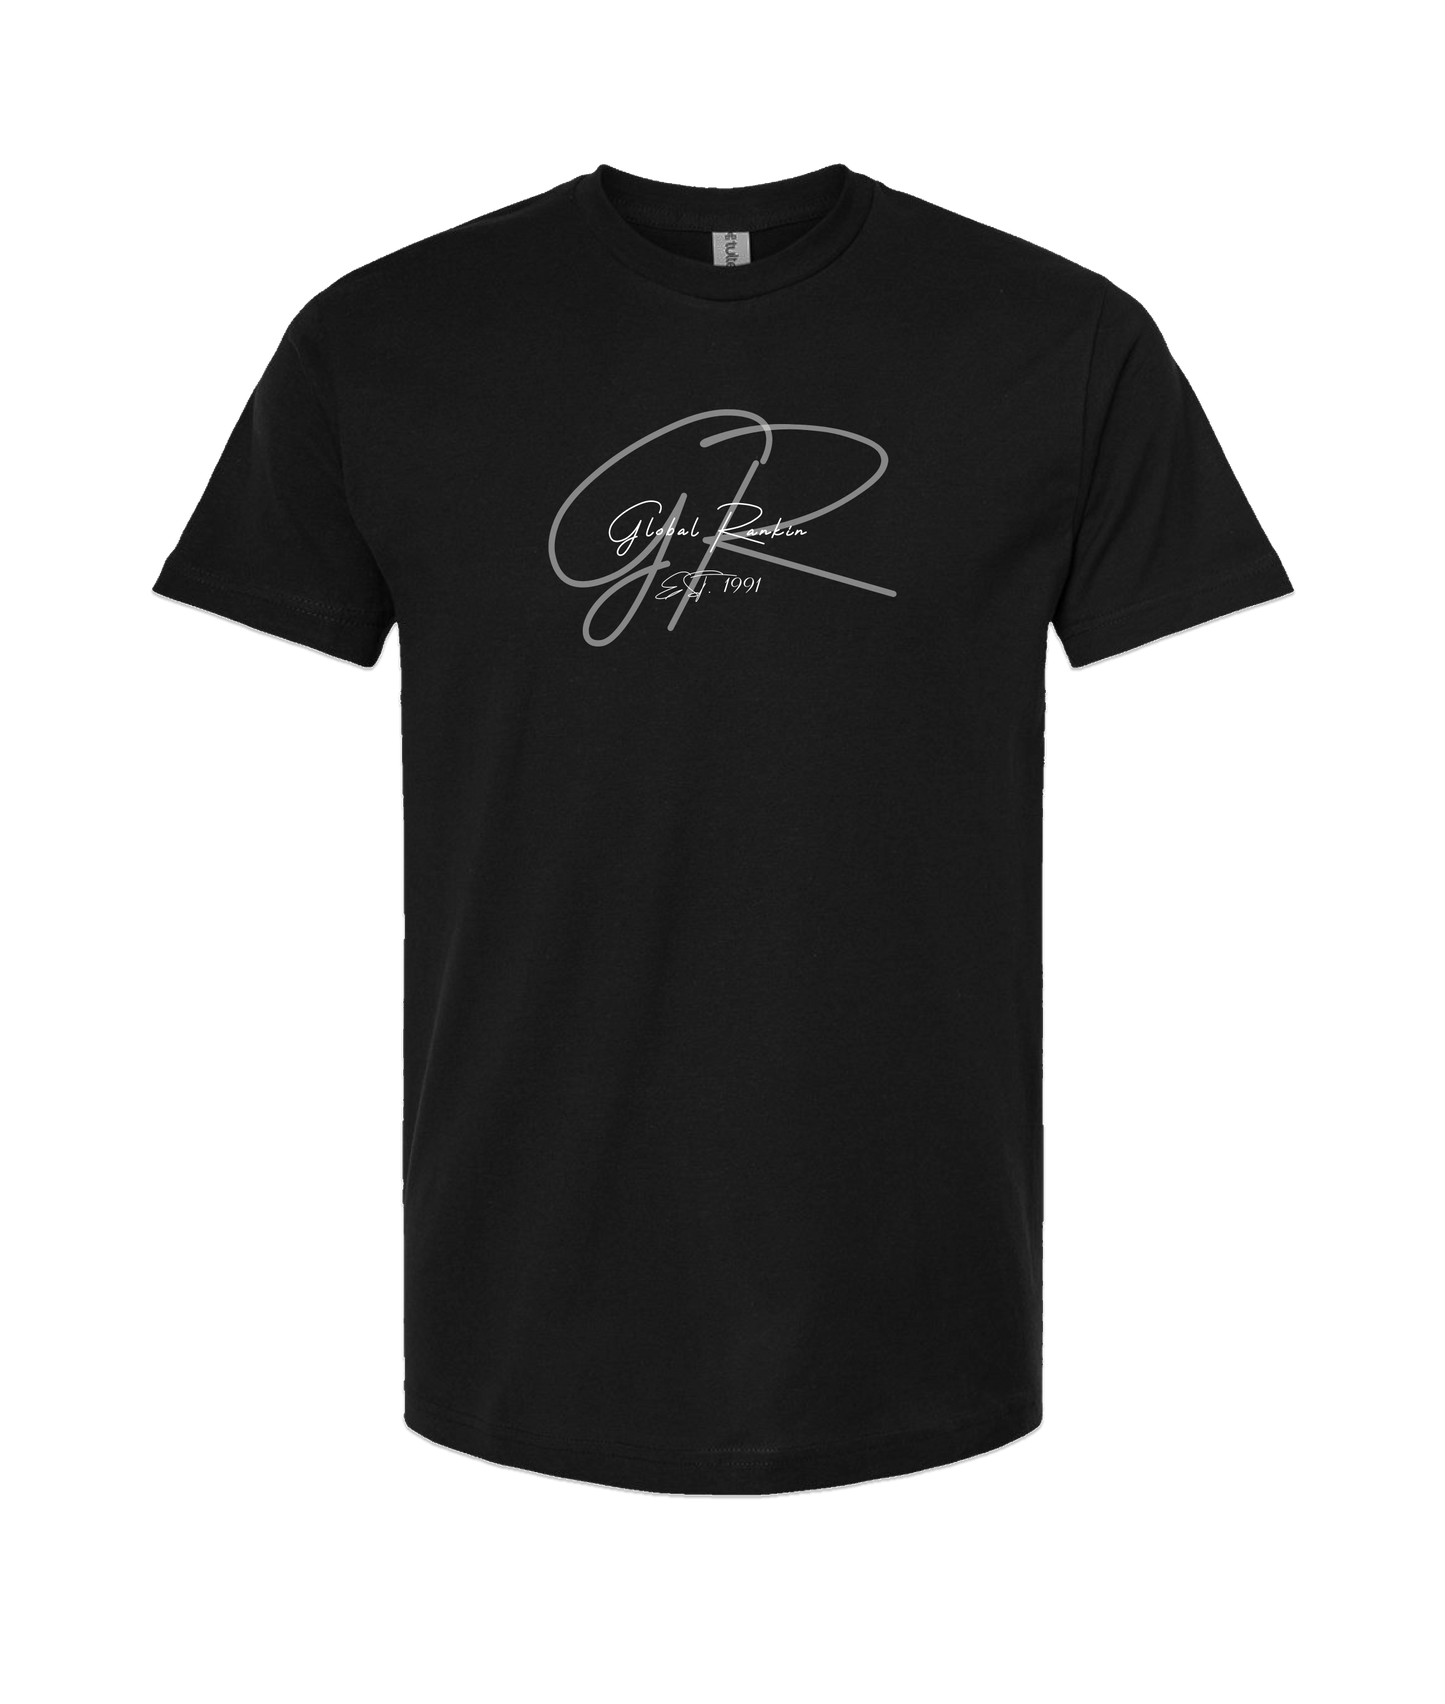 Global Rankin - EST 1991 - Black T-Shirt